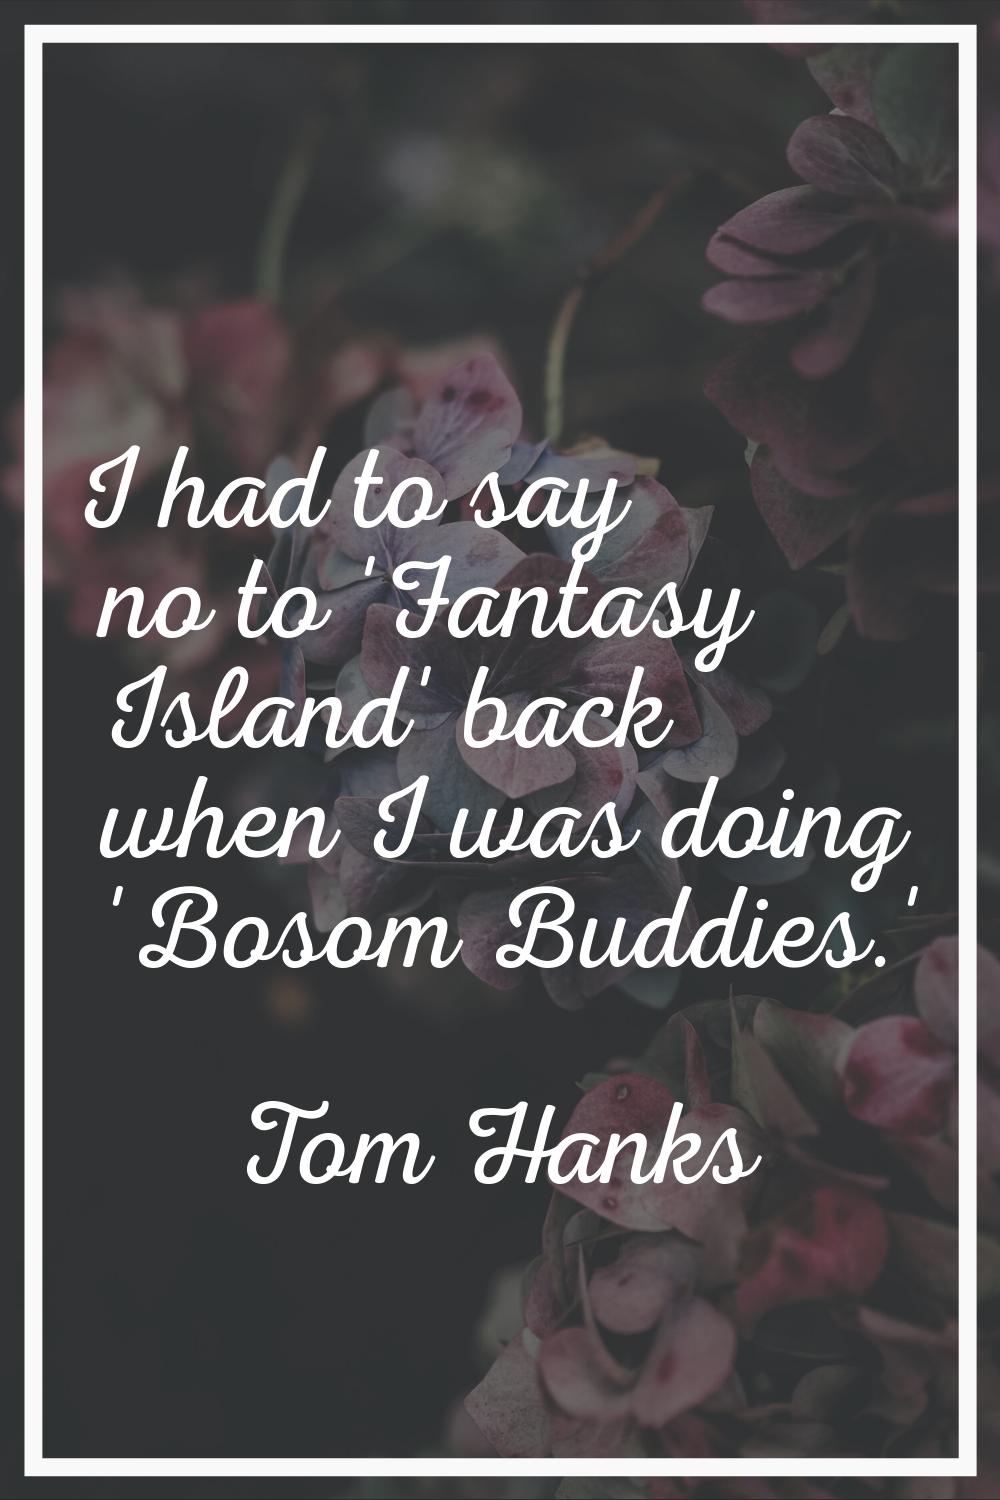 I had to say no to 'Fantasy Island' back when I was doing 'Bosom Buddies.'